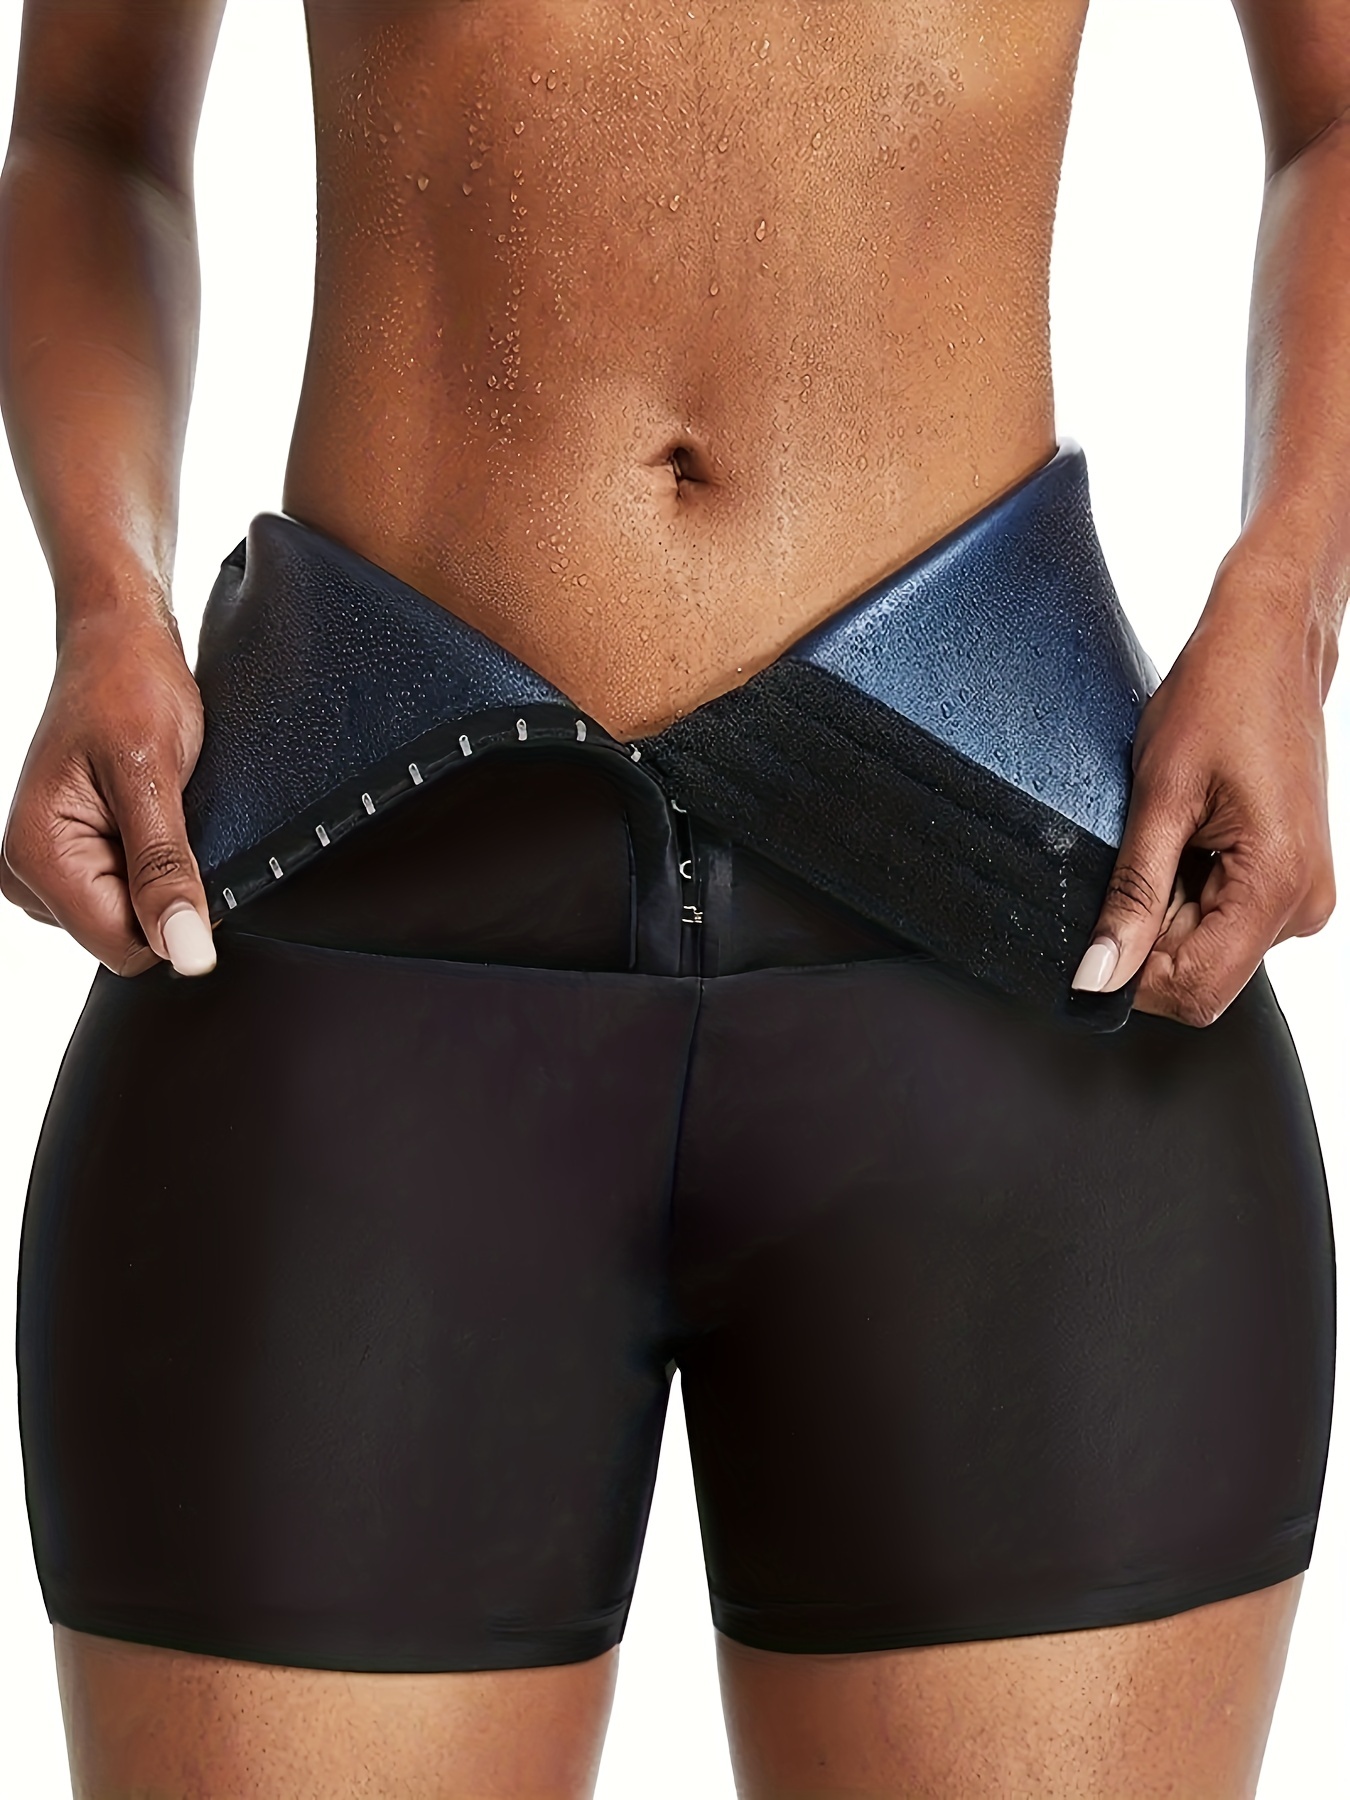 High Waist Tummy Control Sweat Shorts For Women - Butt Lifting And  Shapewear Pants